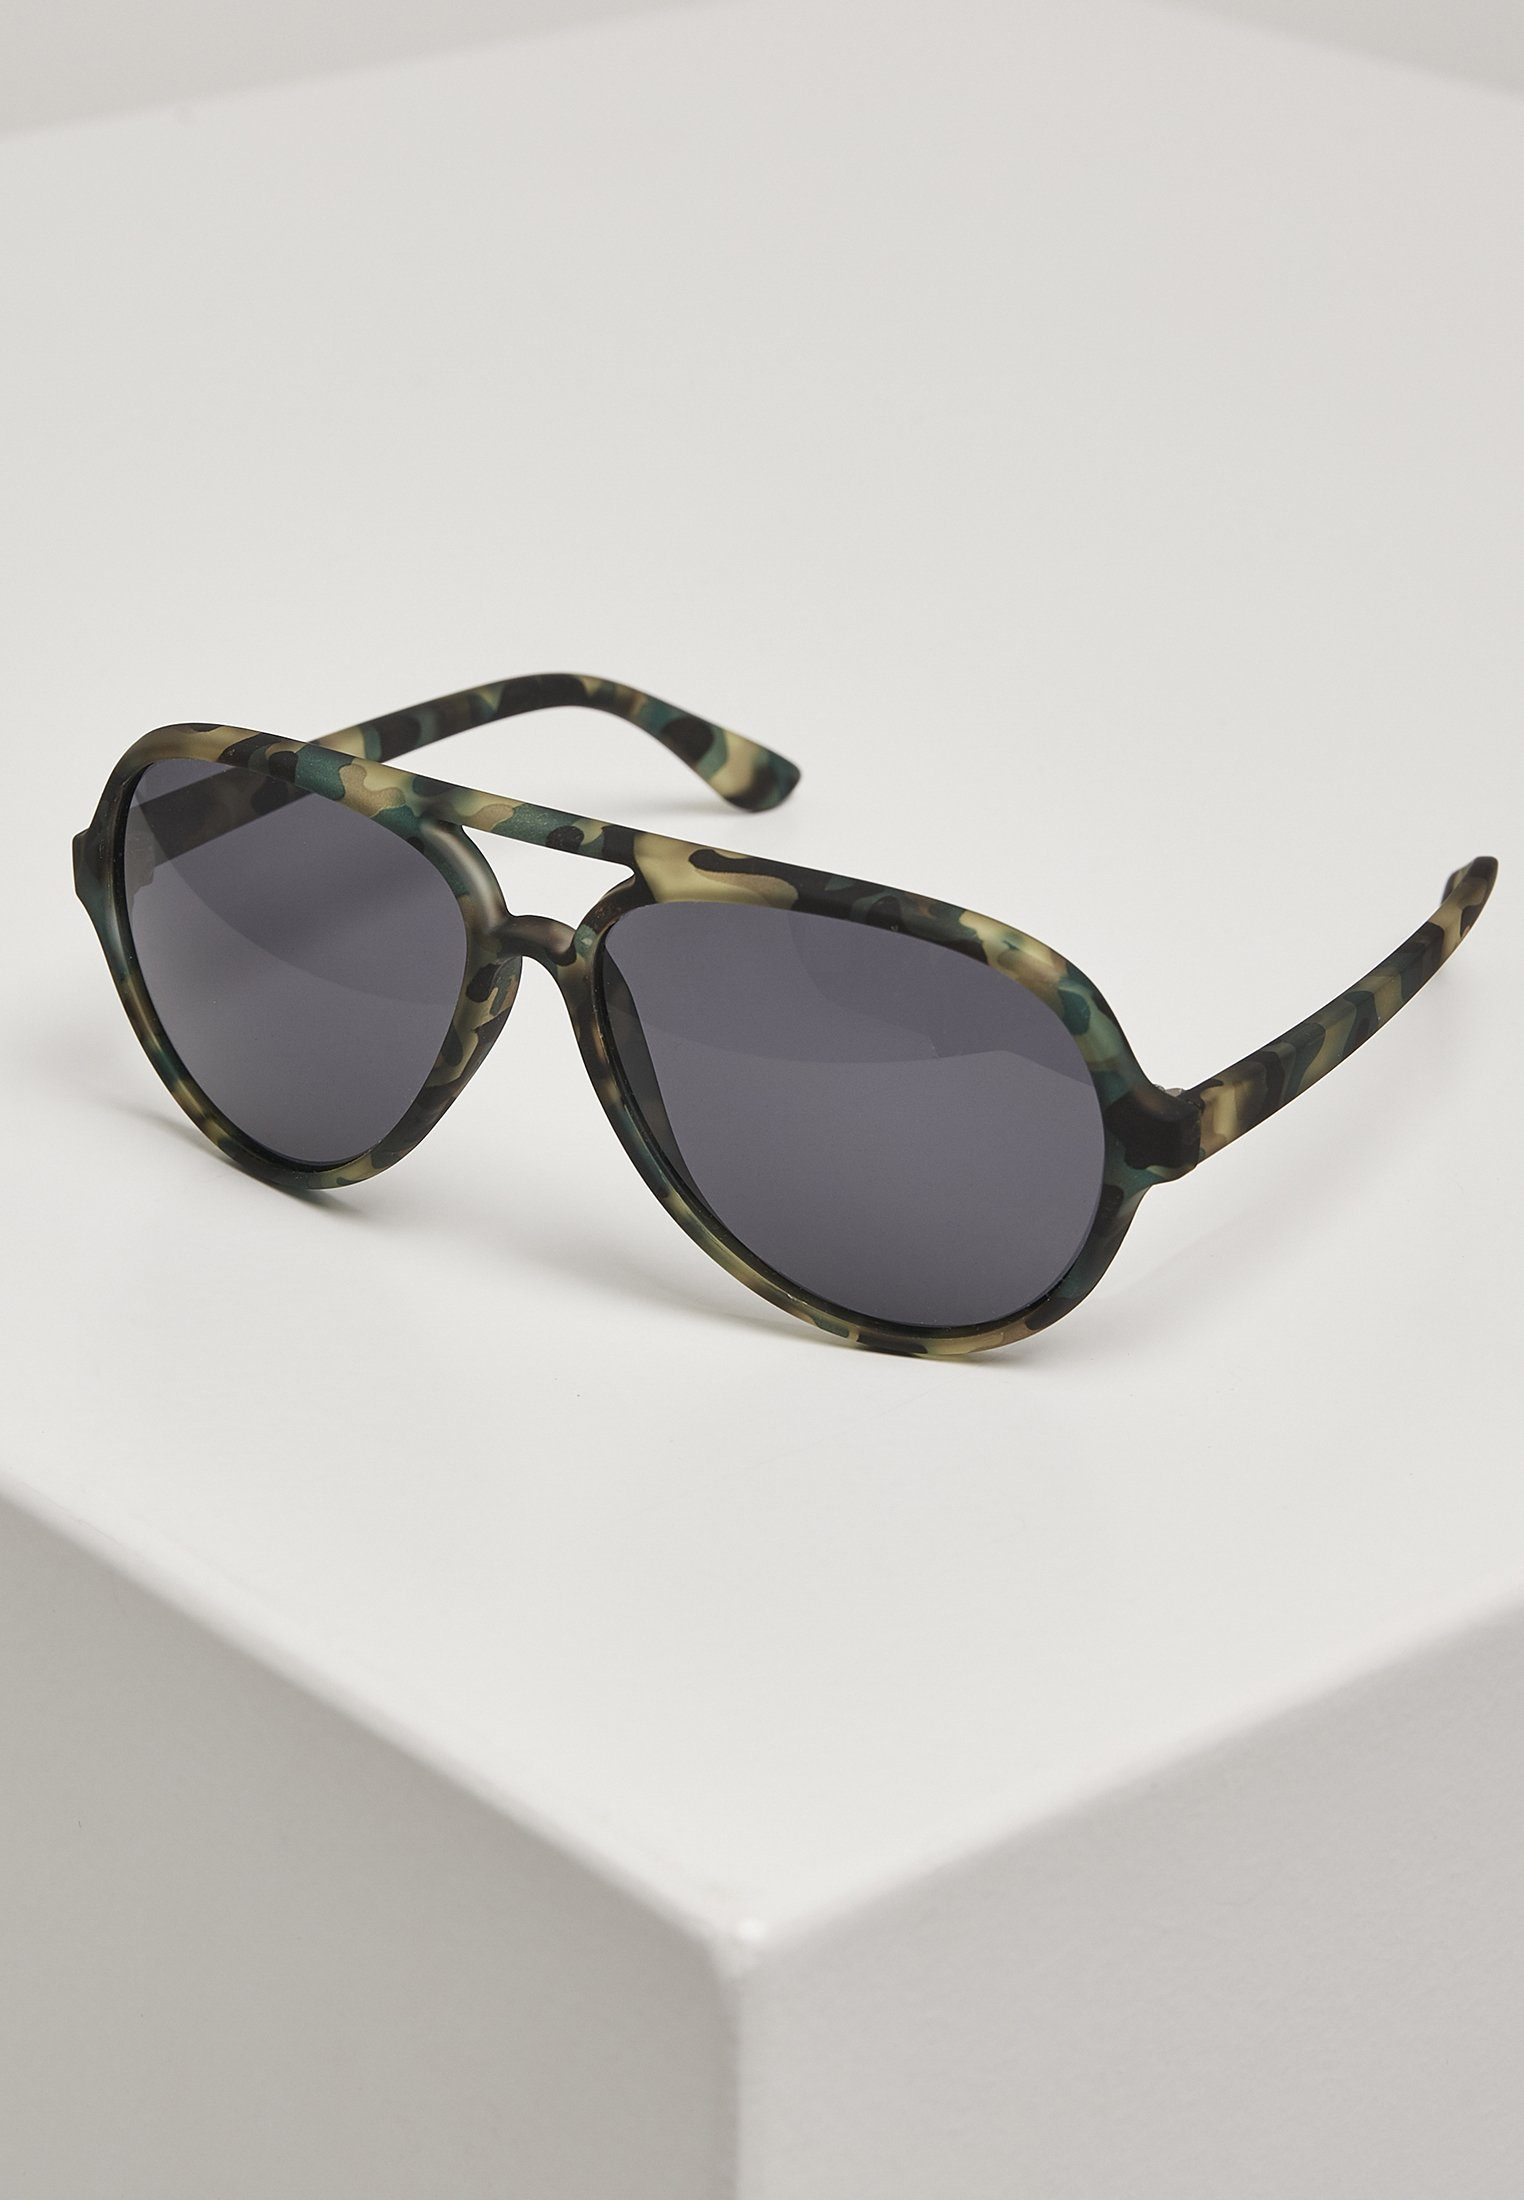 Sonnenbrille March MSTRDS camouflage Accessoires Sunglasses